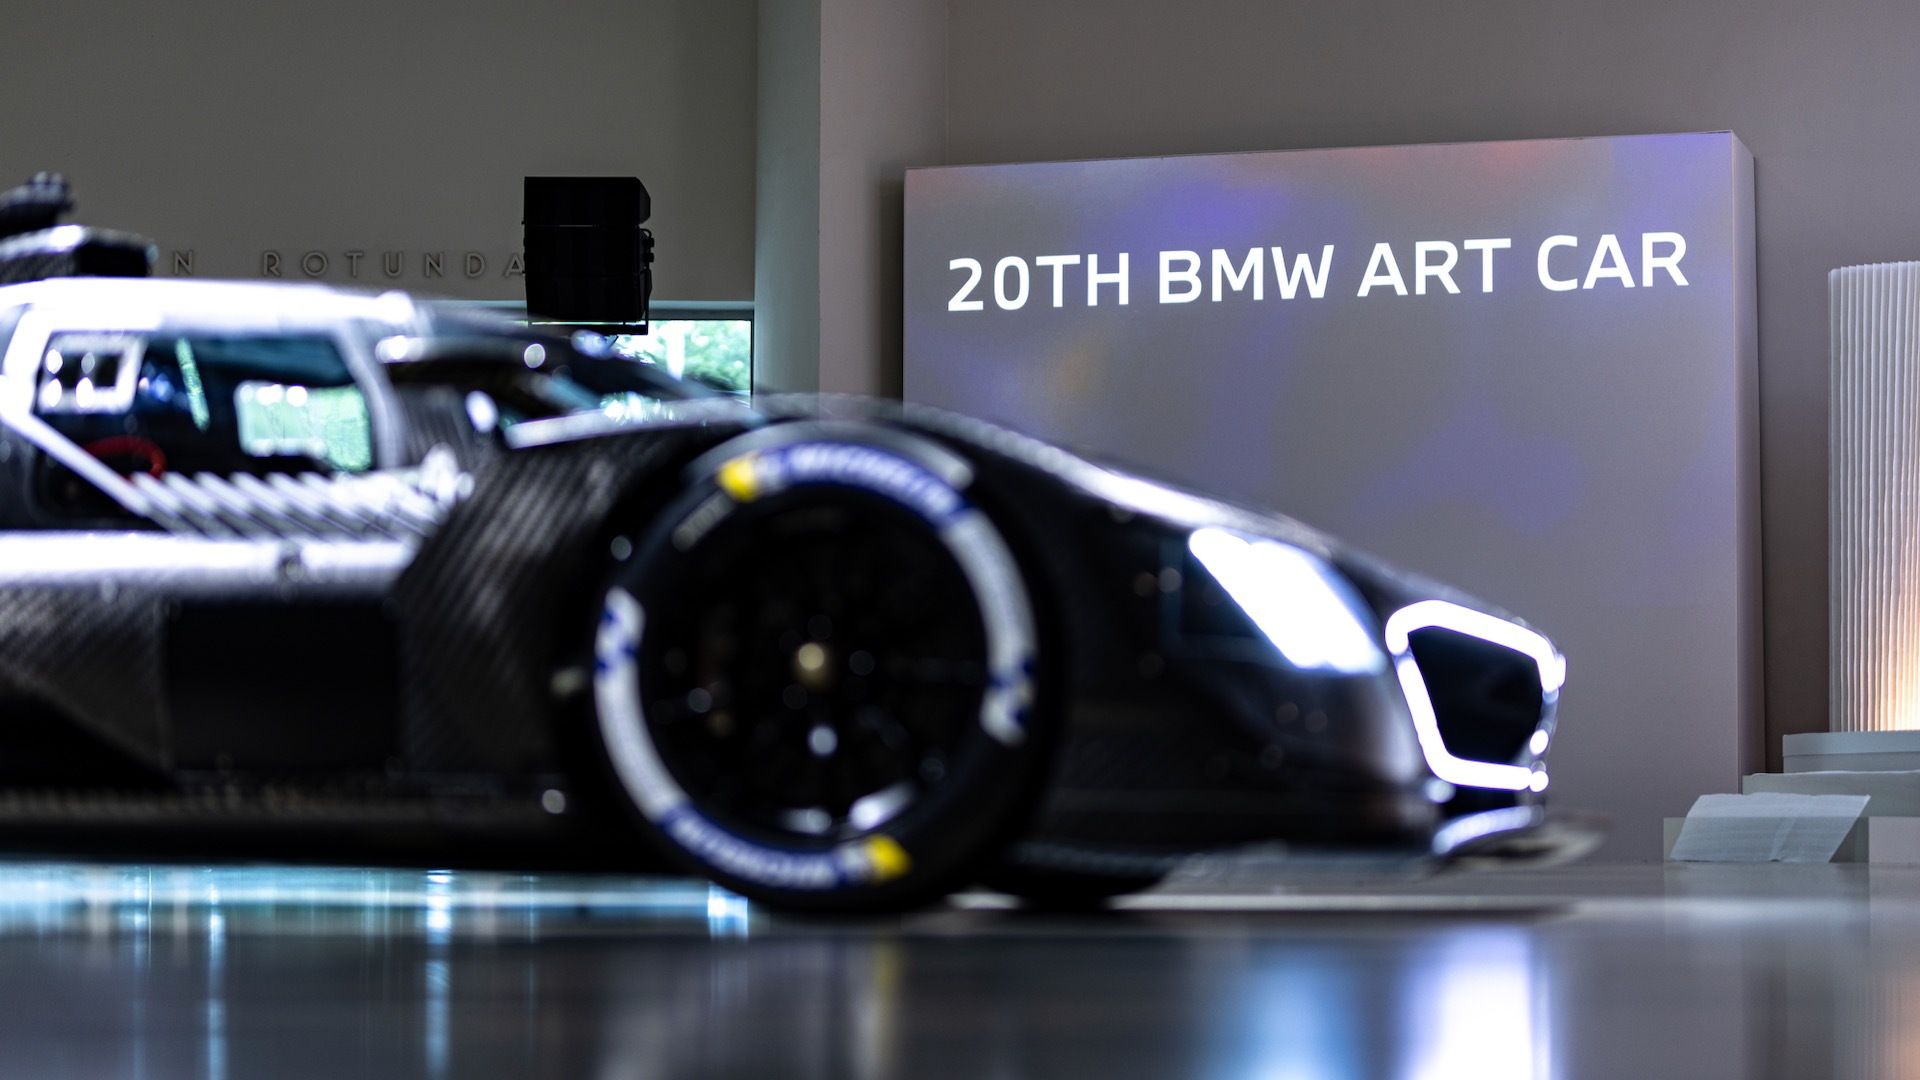 BMW M Hybrid V8 will become the 20th BMW art car.